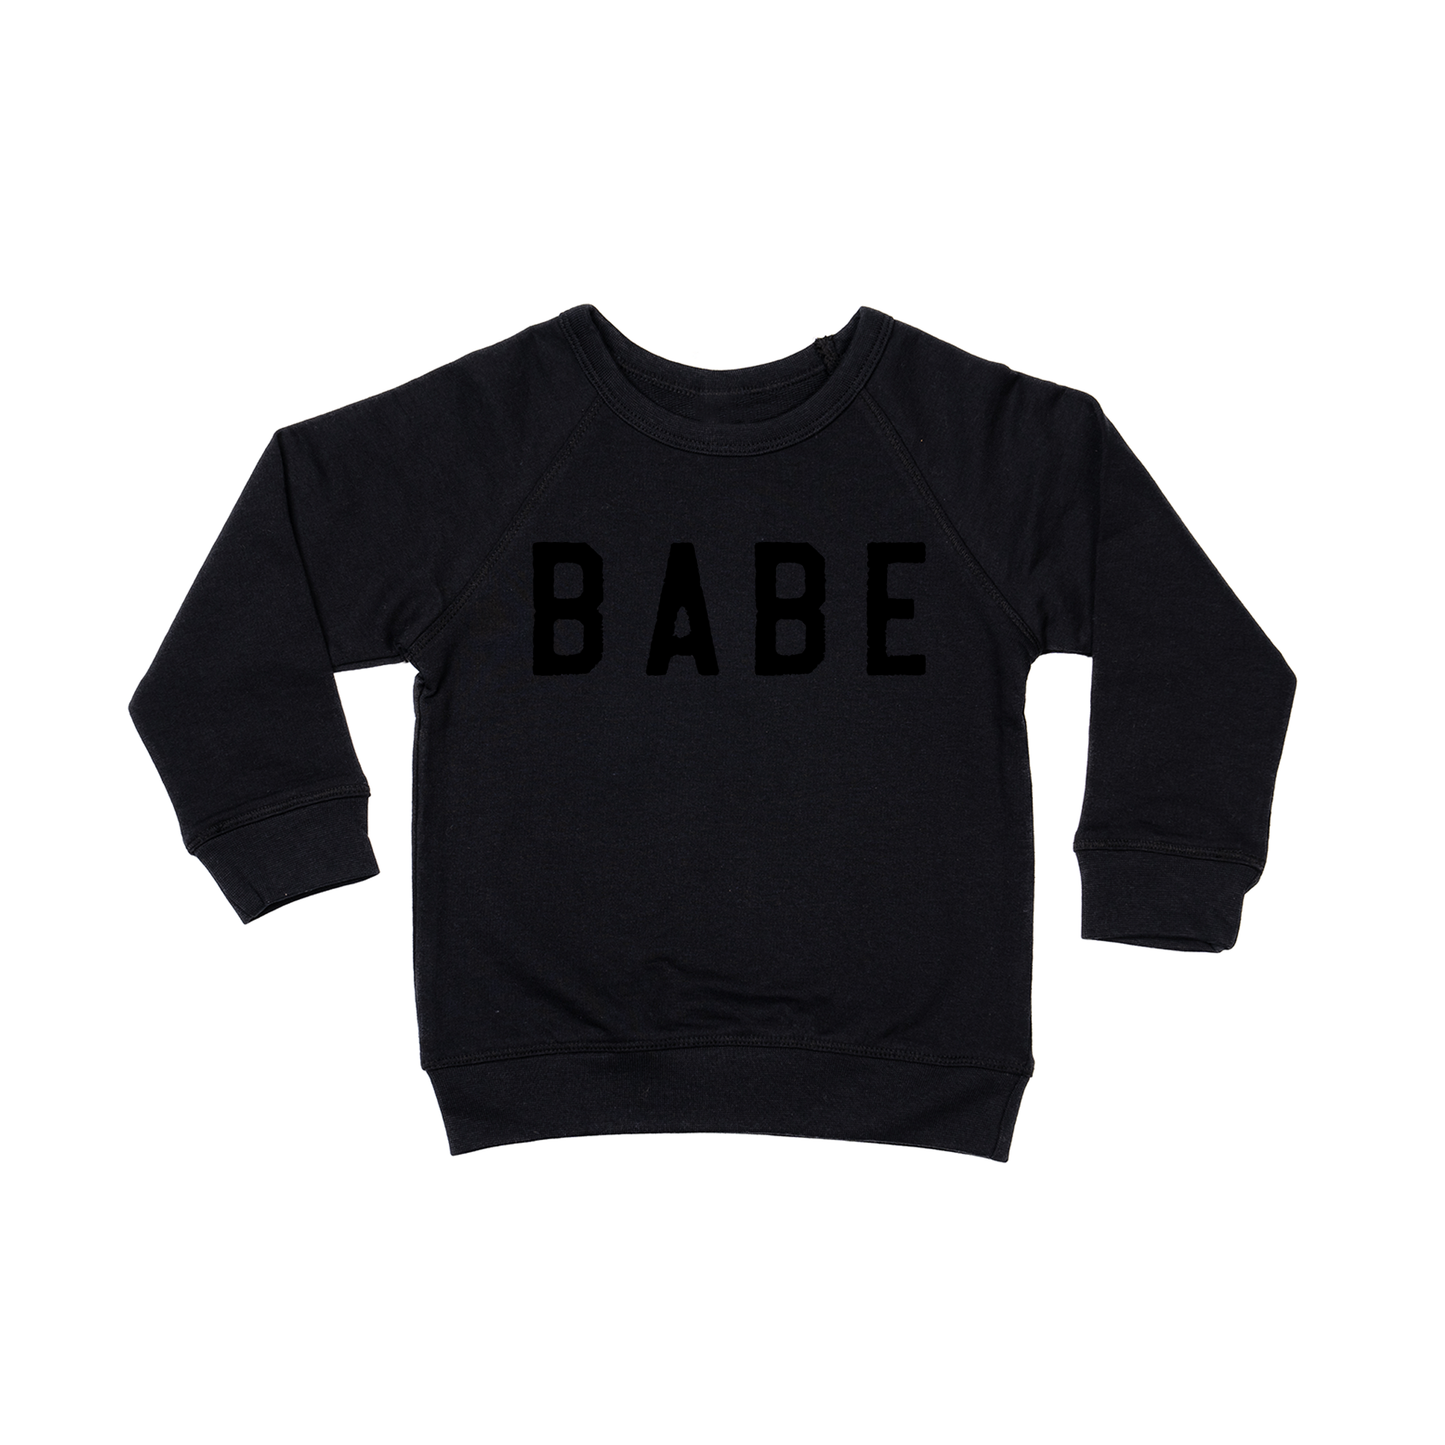 BABE (Rough, Black) - Kids Sweatshirt (Black)